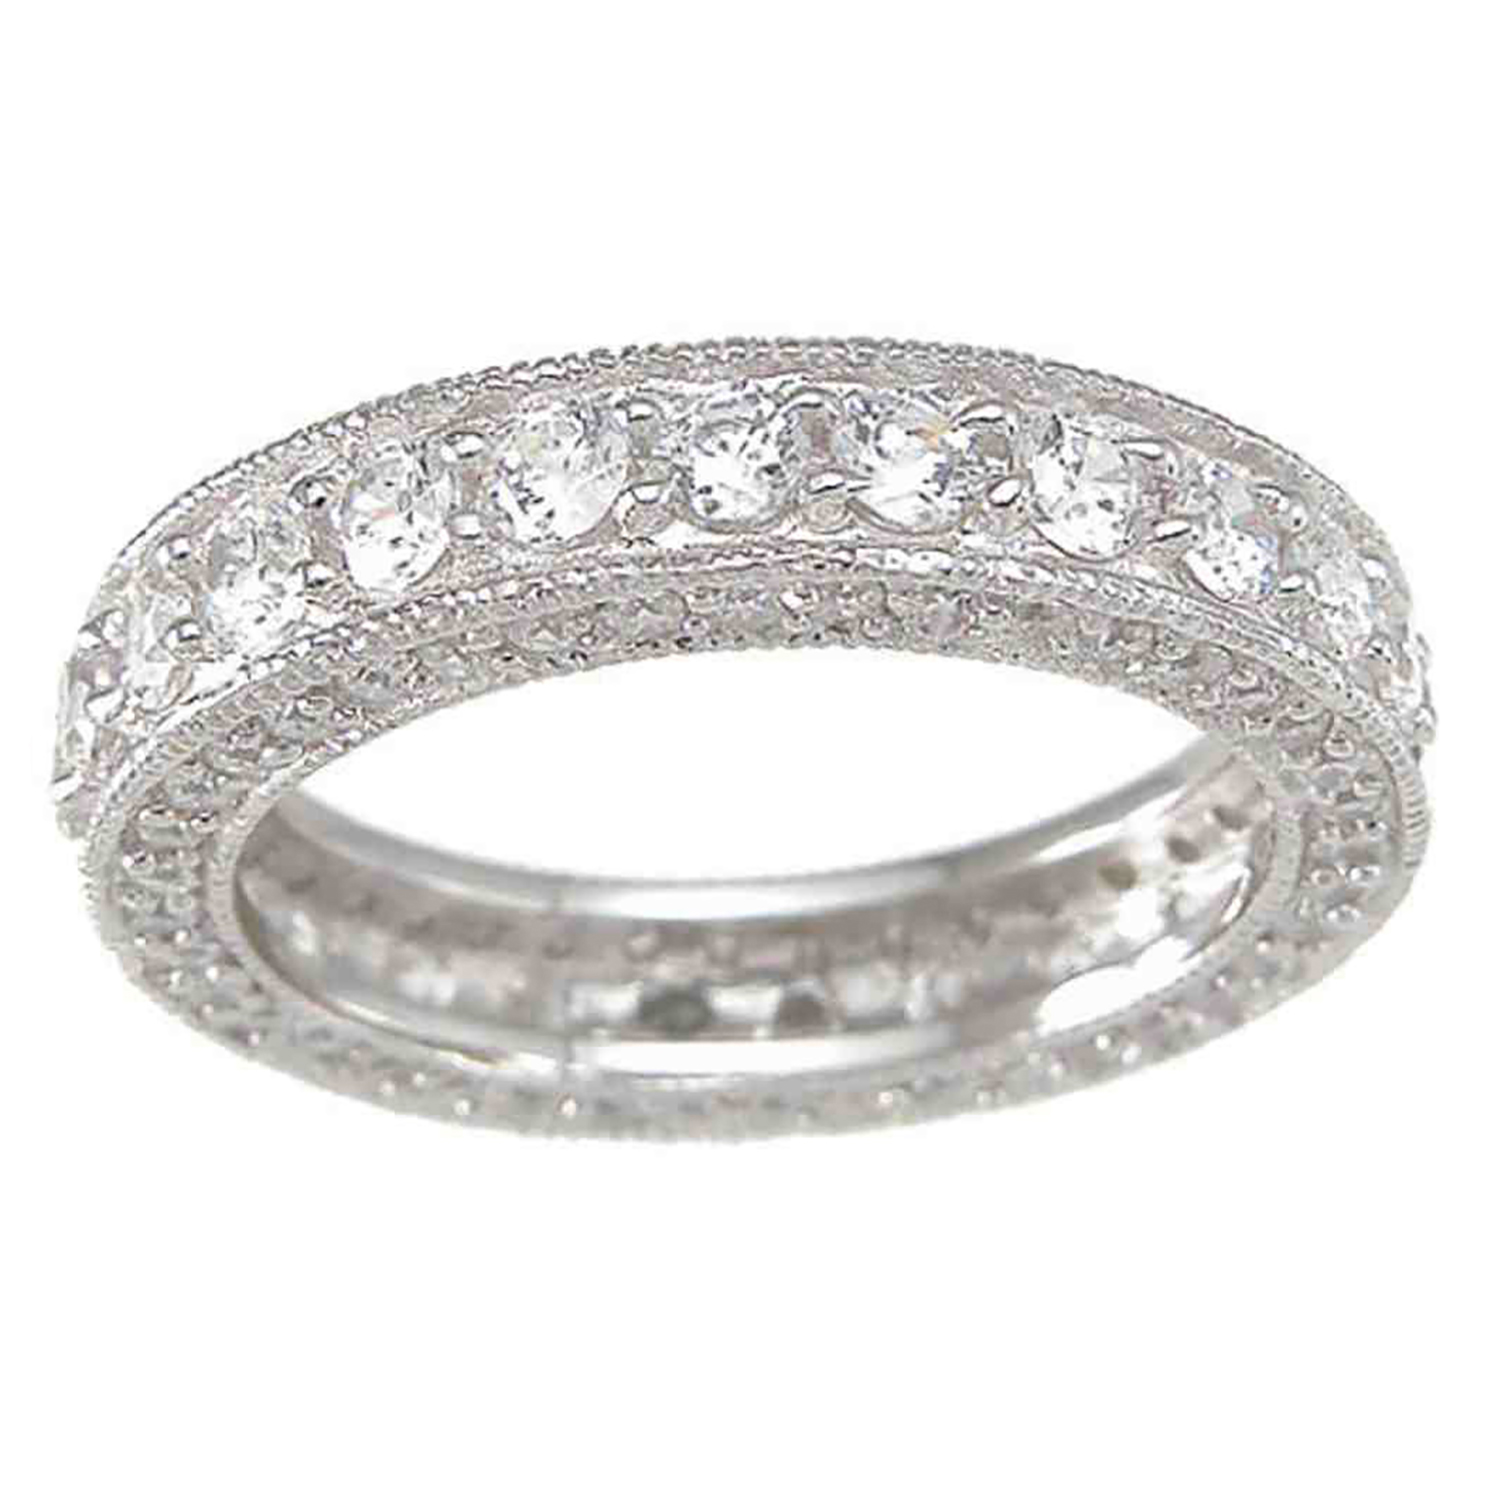 LaRaso Co CZ Wedding Band Eternity Anniversary Ring for Women Size 9 - image 1 of 4